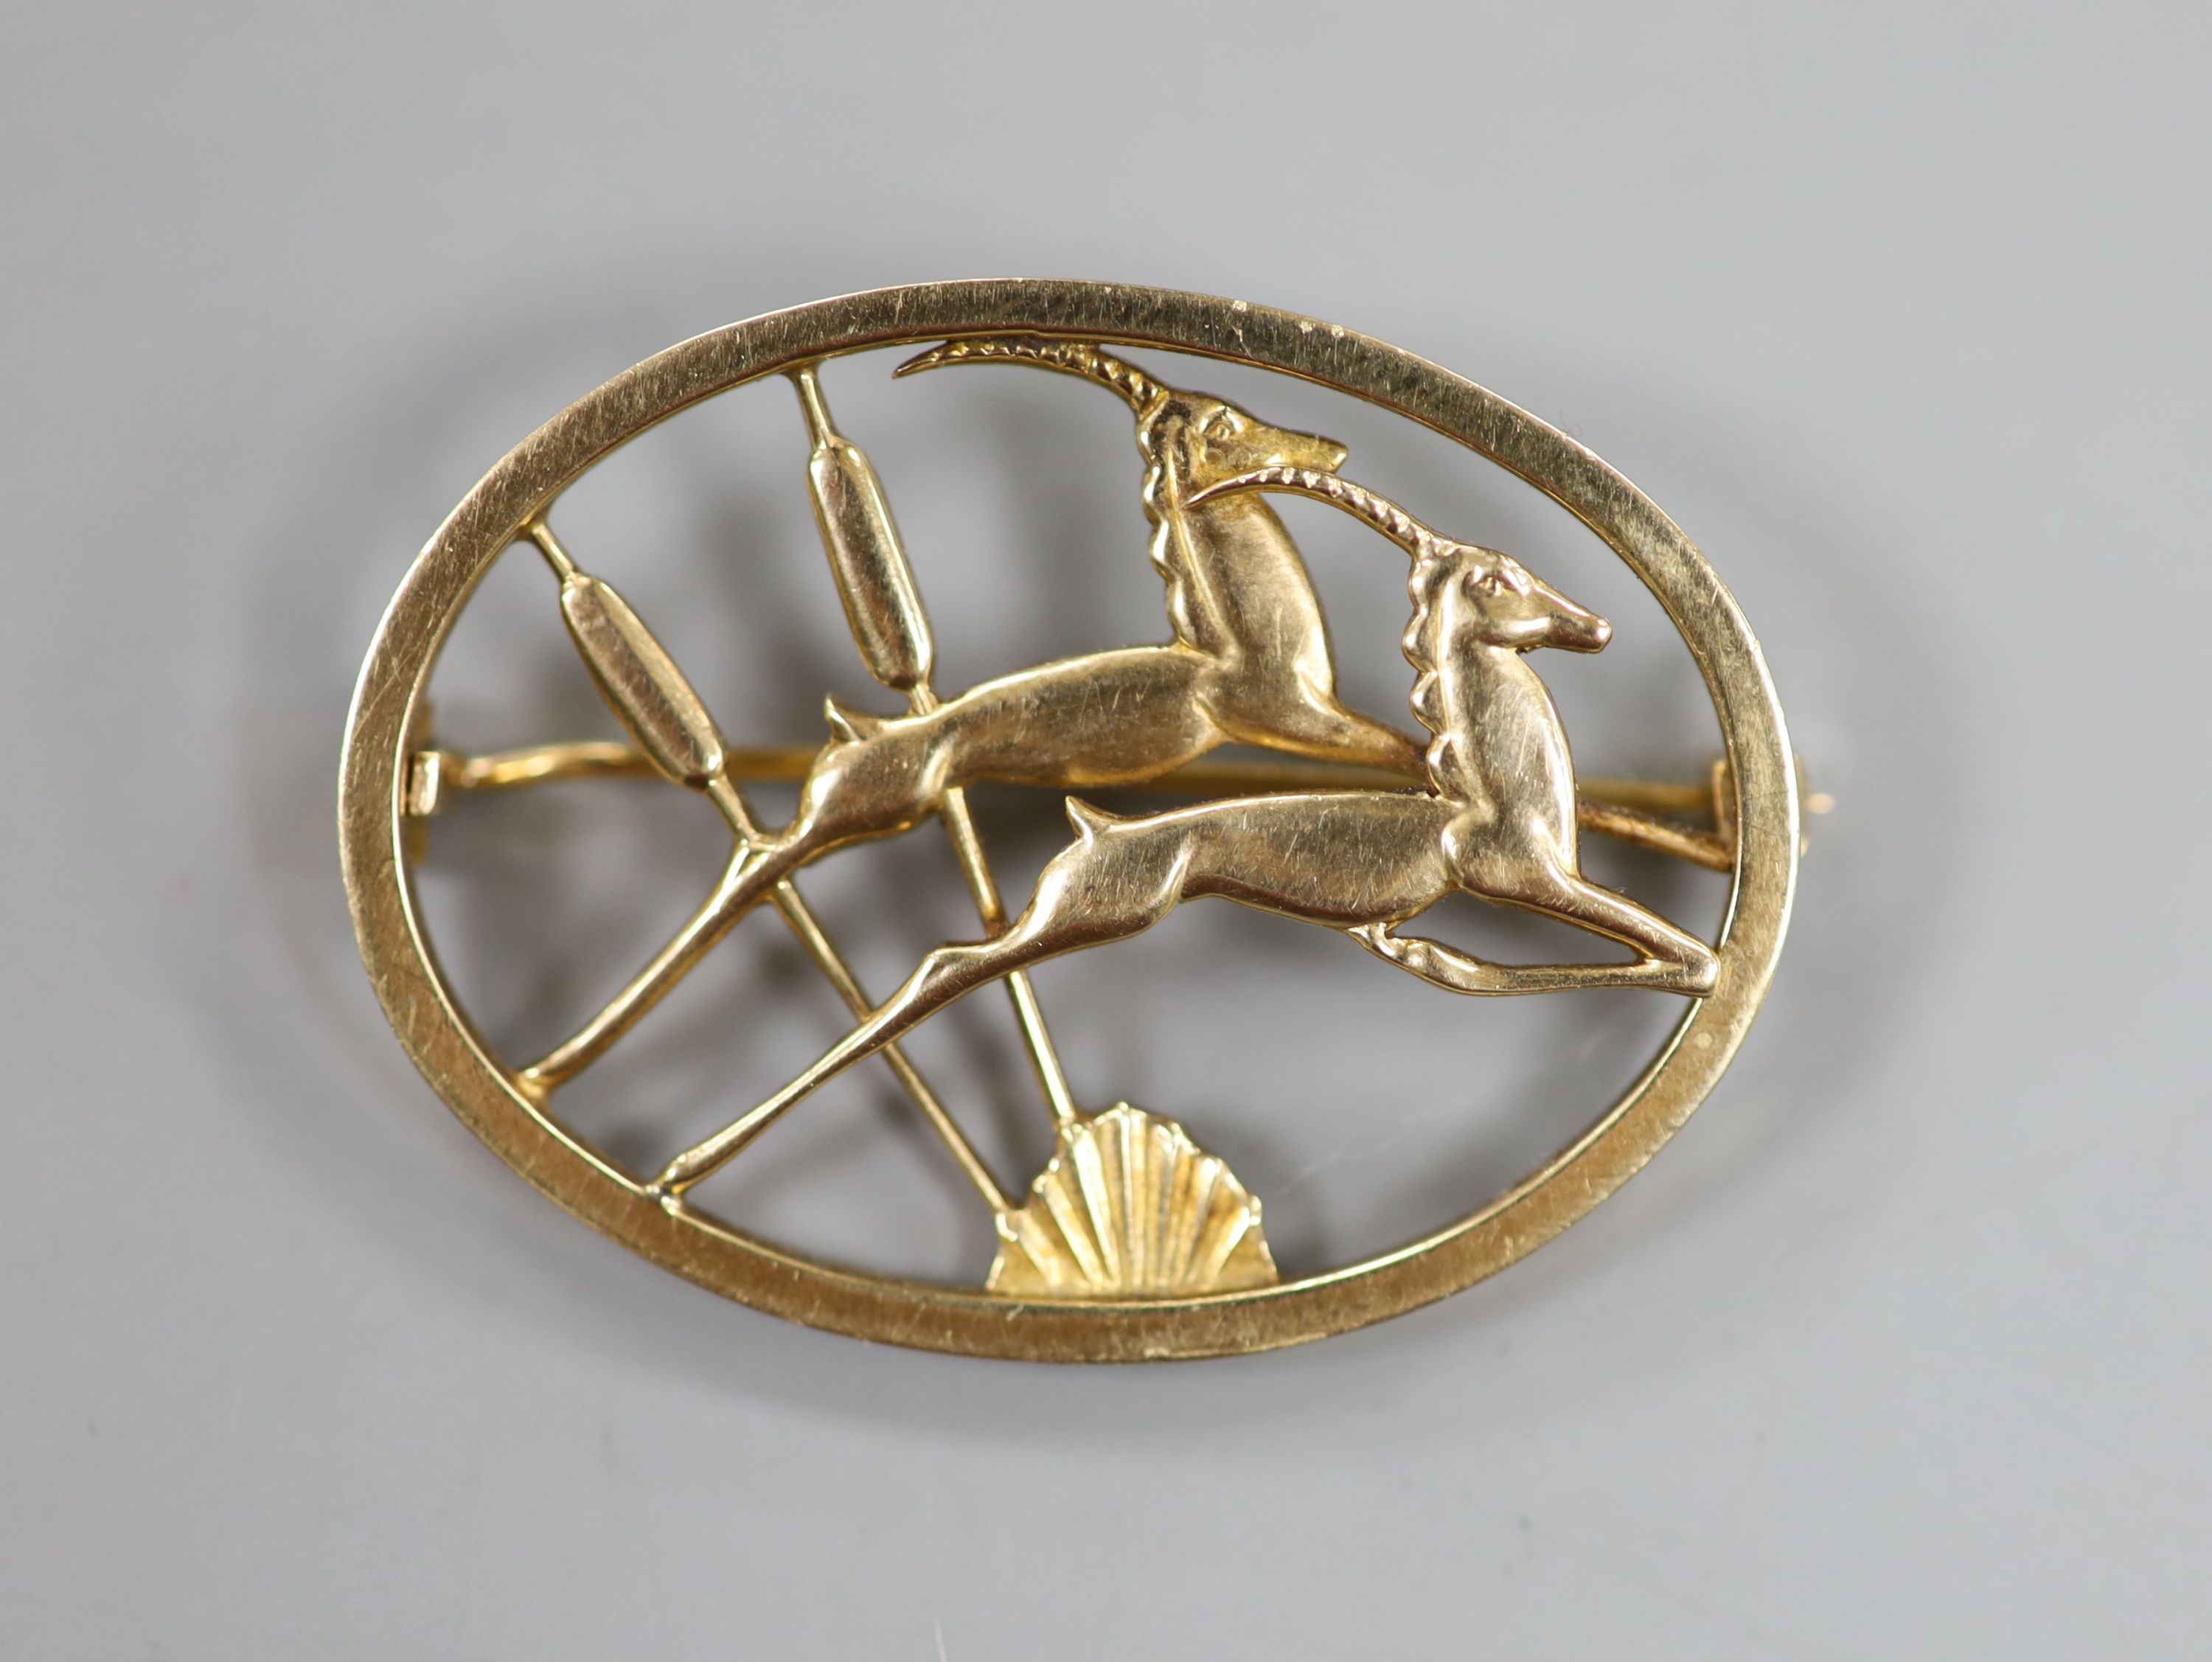 An Ivan Tarratt Georg Jensen style 9ct gold leaping antelope oval brooch, George Tarratt Ltd, Birmingham, 1962, 42mm, 11.5 grams.                                                                                           